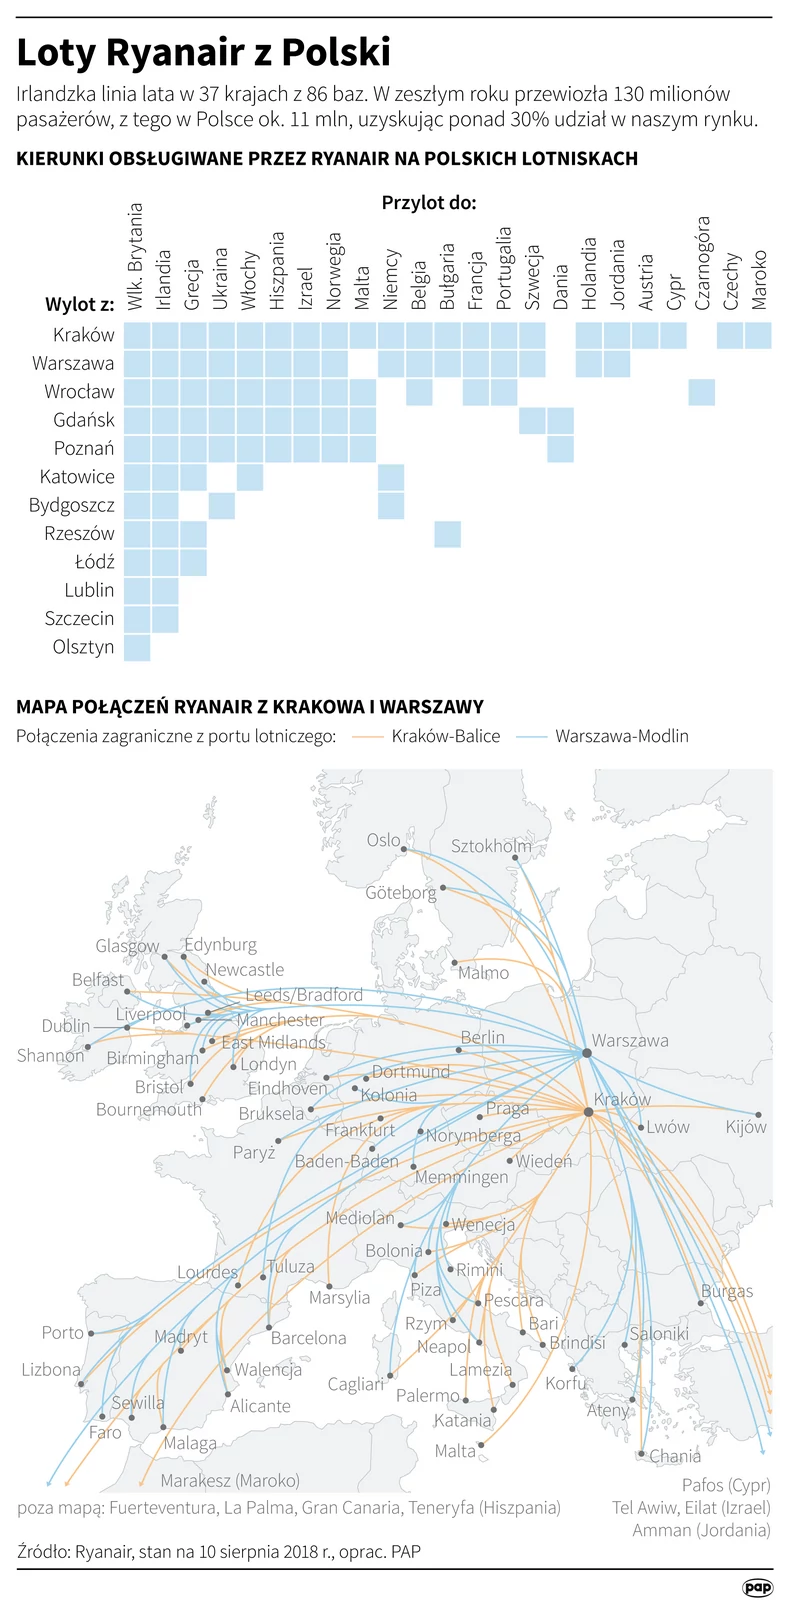 Dokąd lata Ryanair z polskich lotnisk?